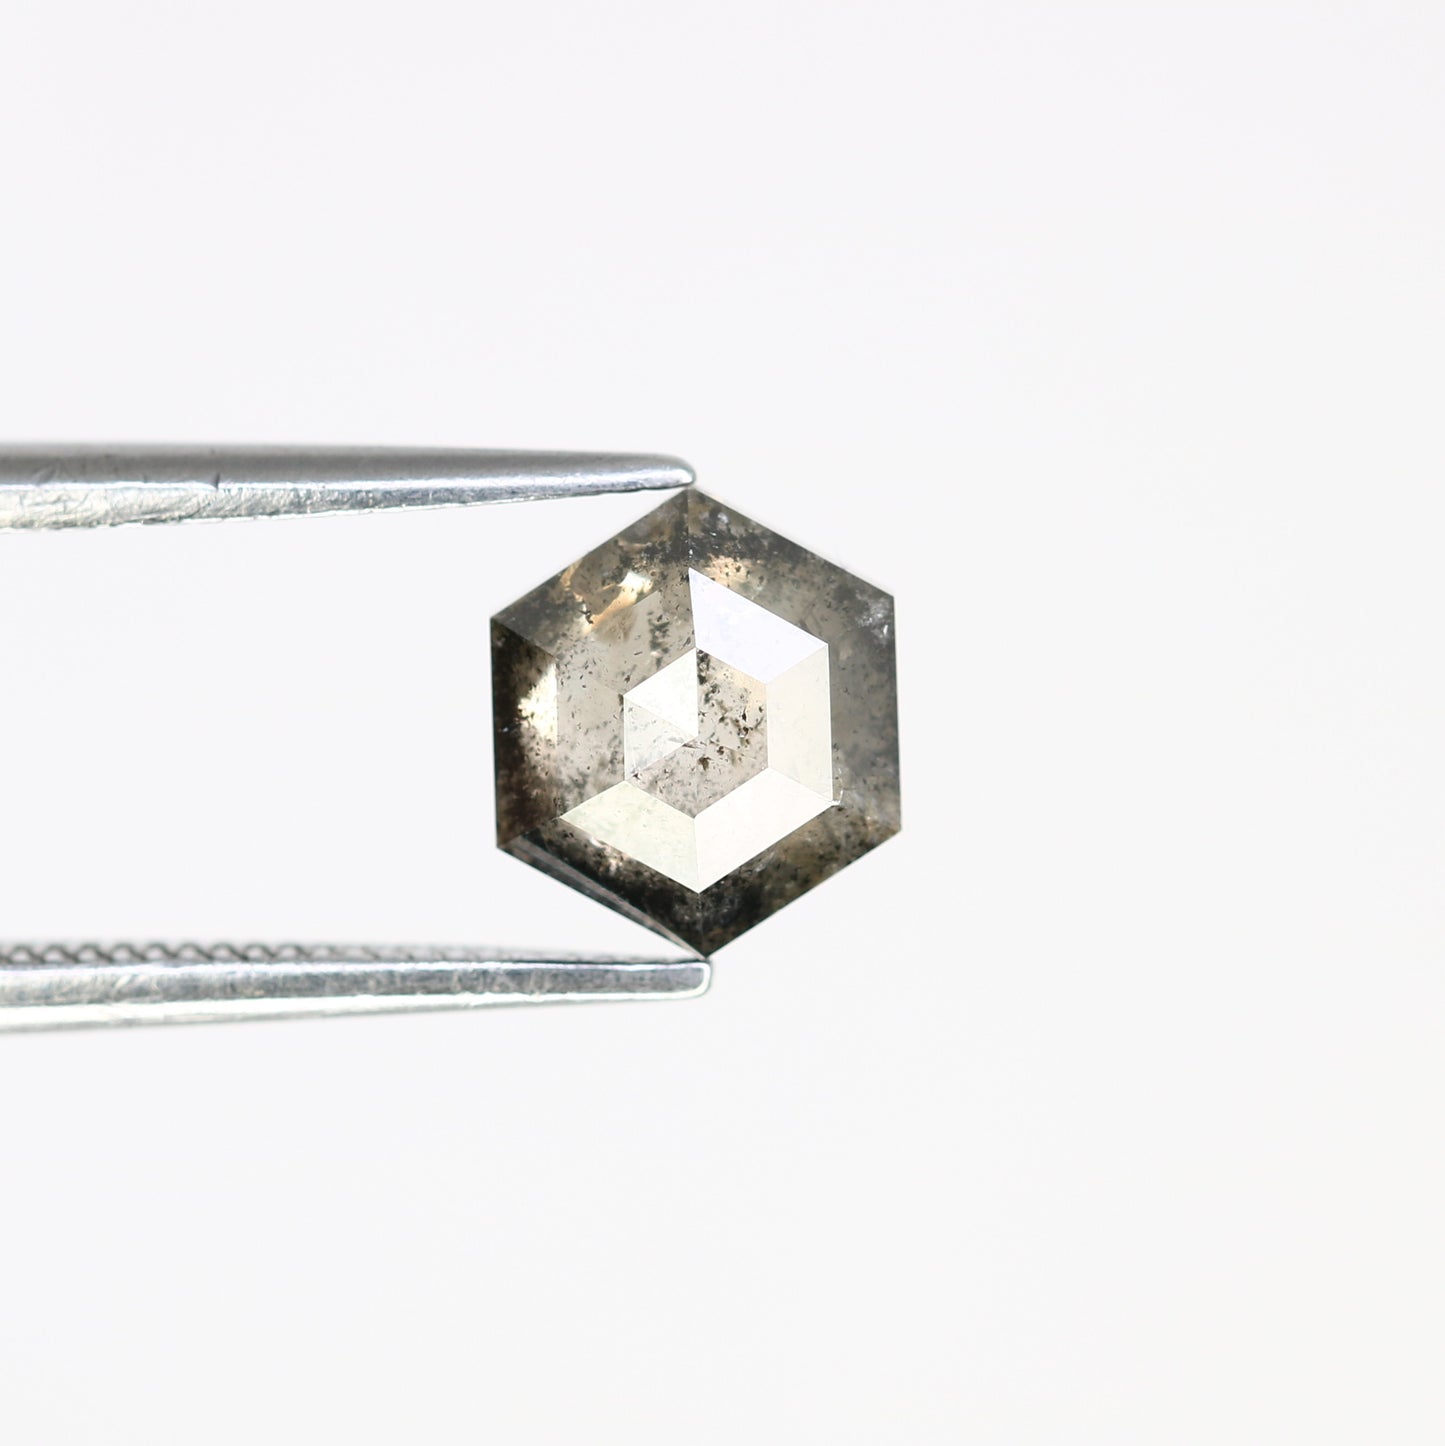 1.46 CT 7.30 MM Hexagon Shape Loose Salt And Pepper Diamond For Wedding Ring